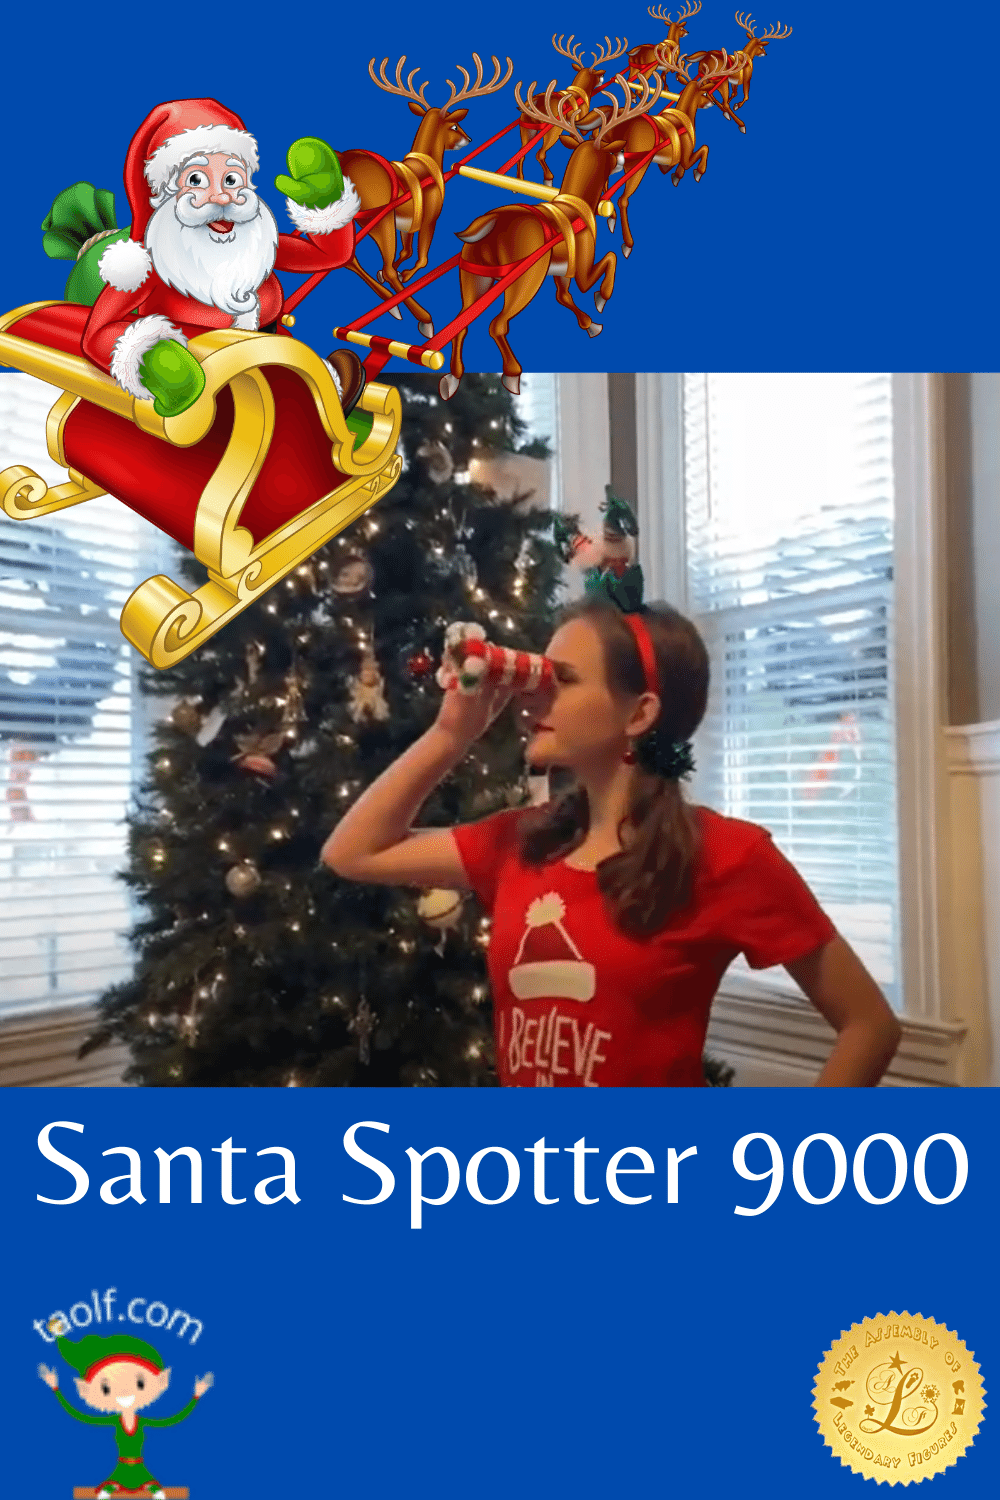 Create the Santa Spotter 9000